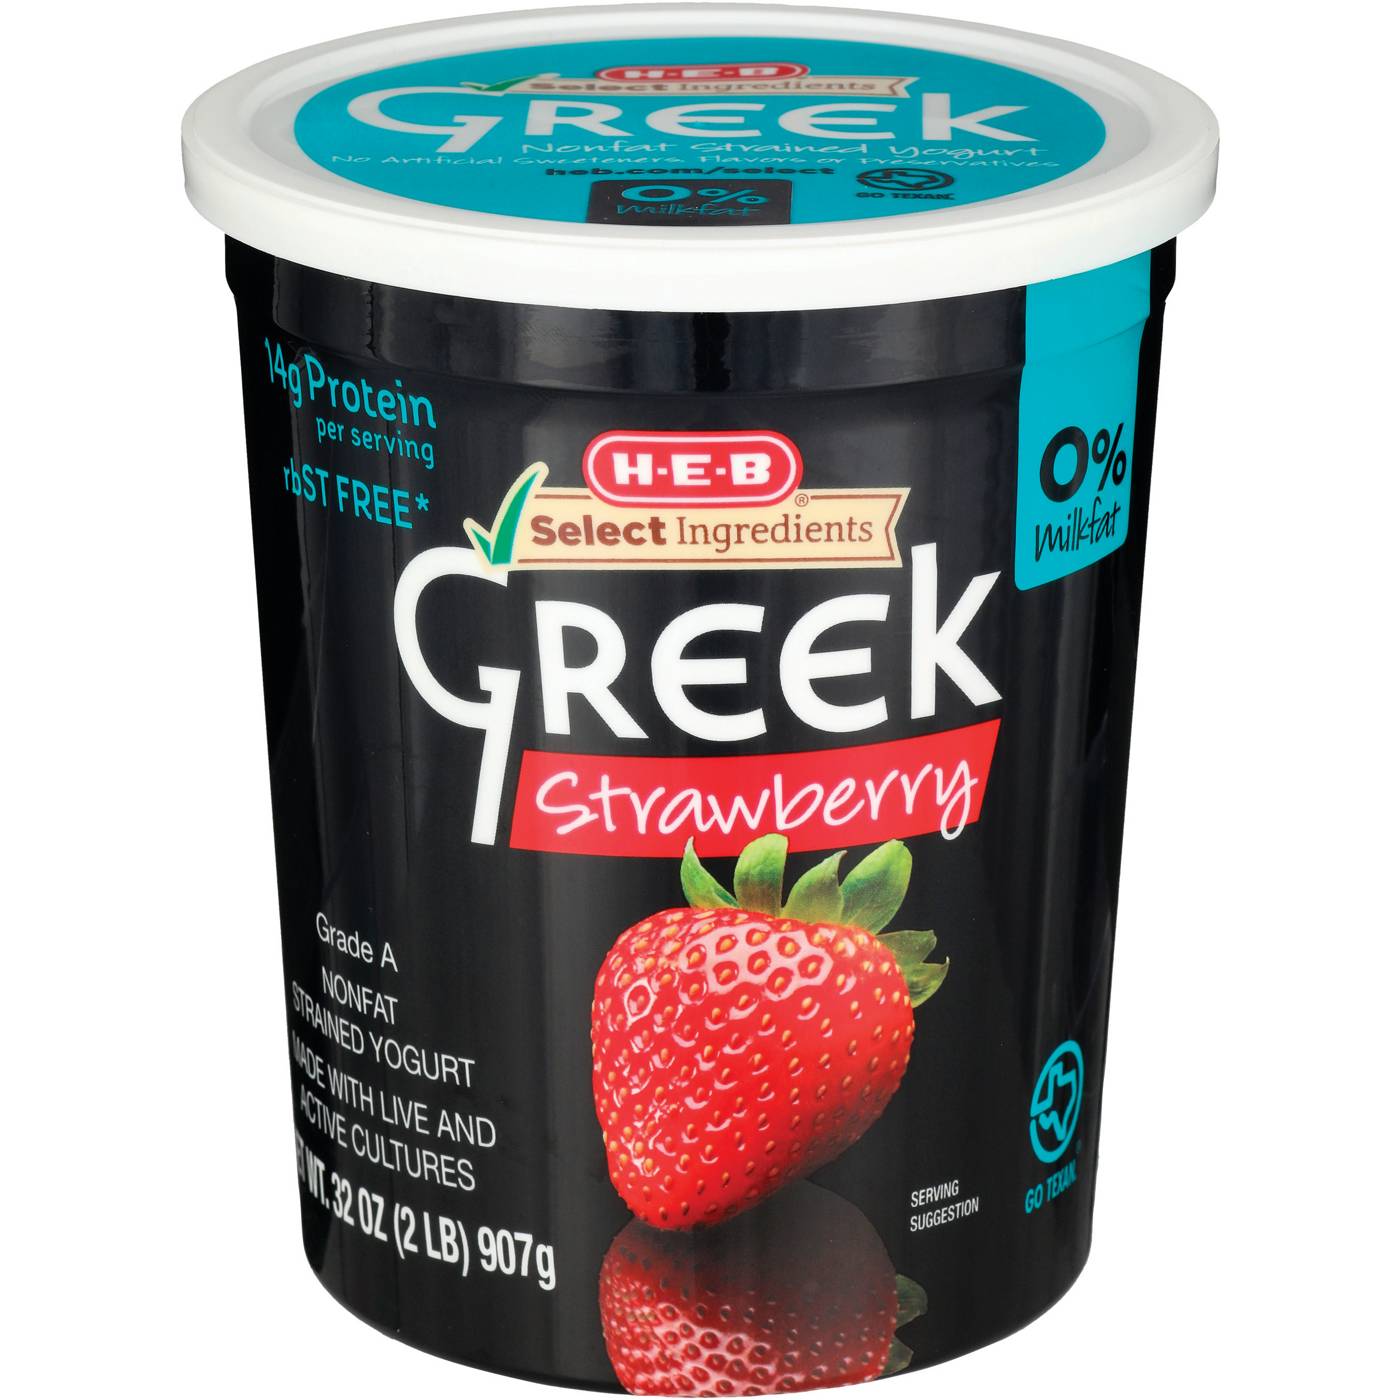 H-E-B 14g Protein Nonfat Greek Yogurt - Strawberry; image 1 of 2